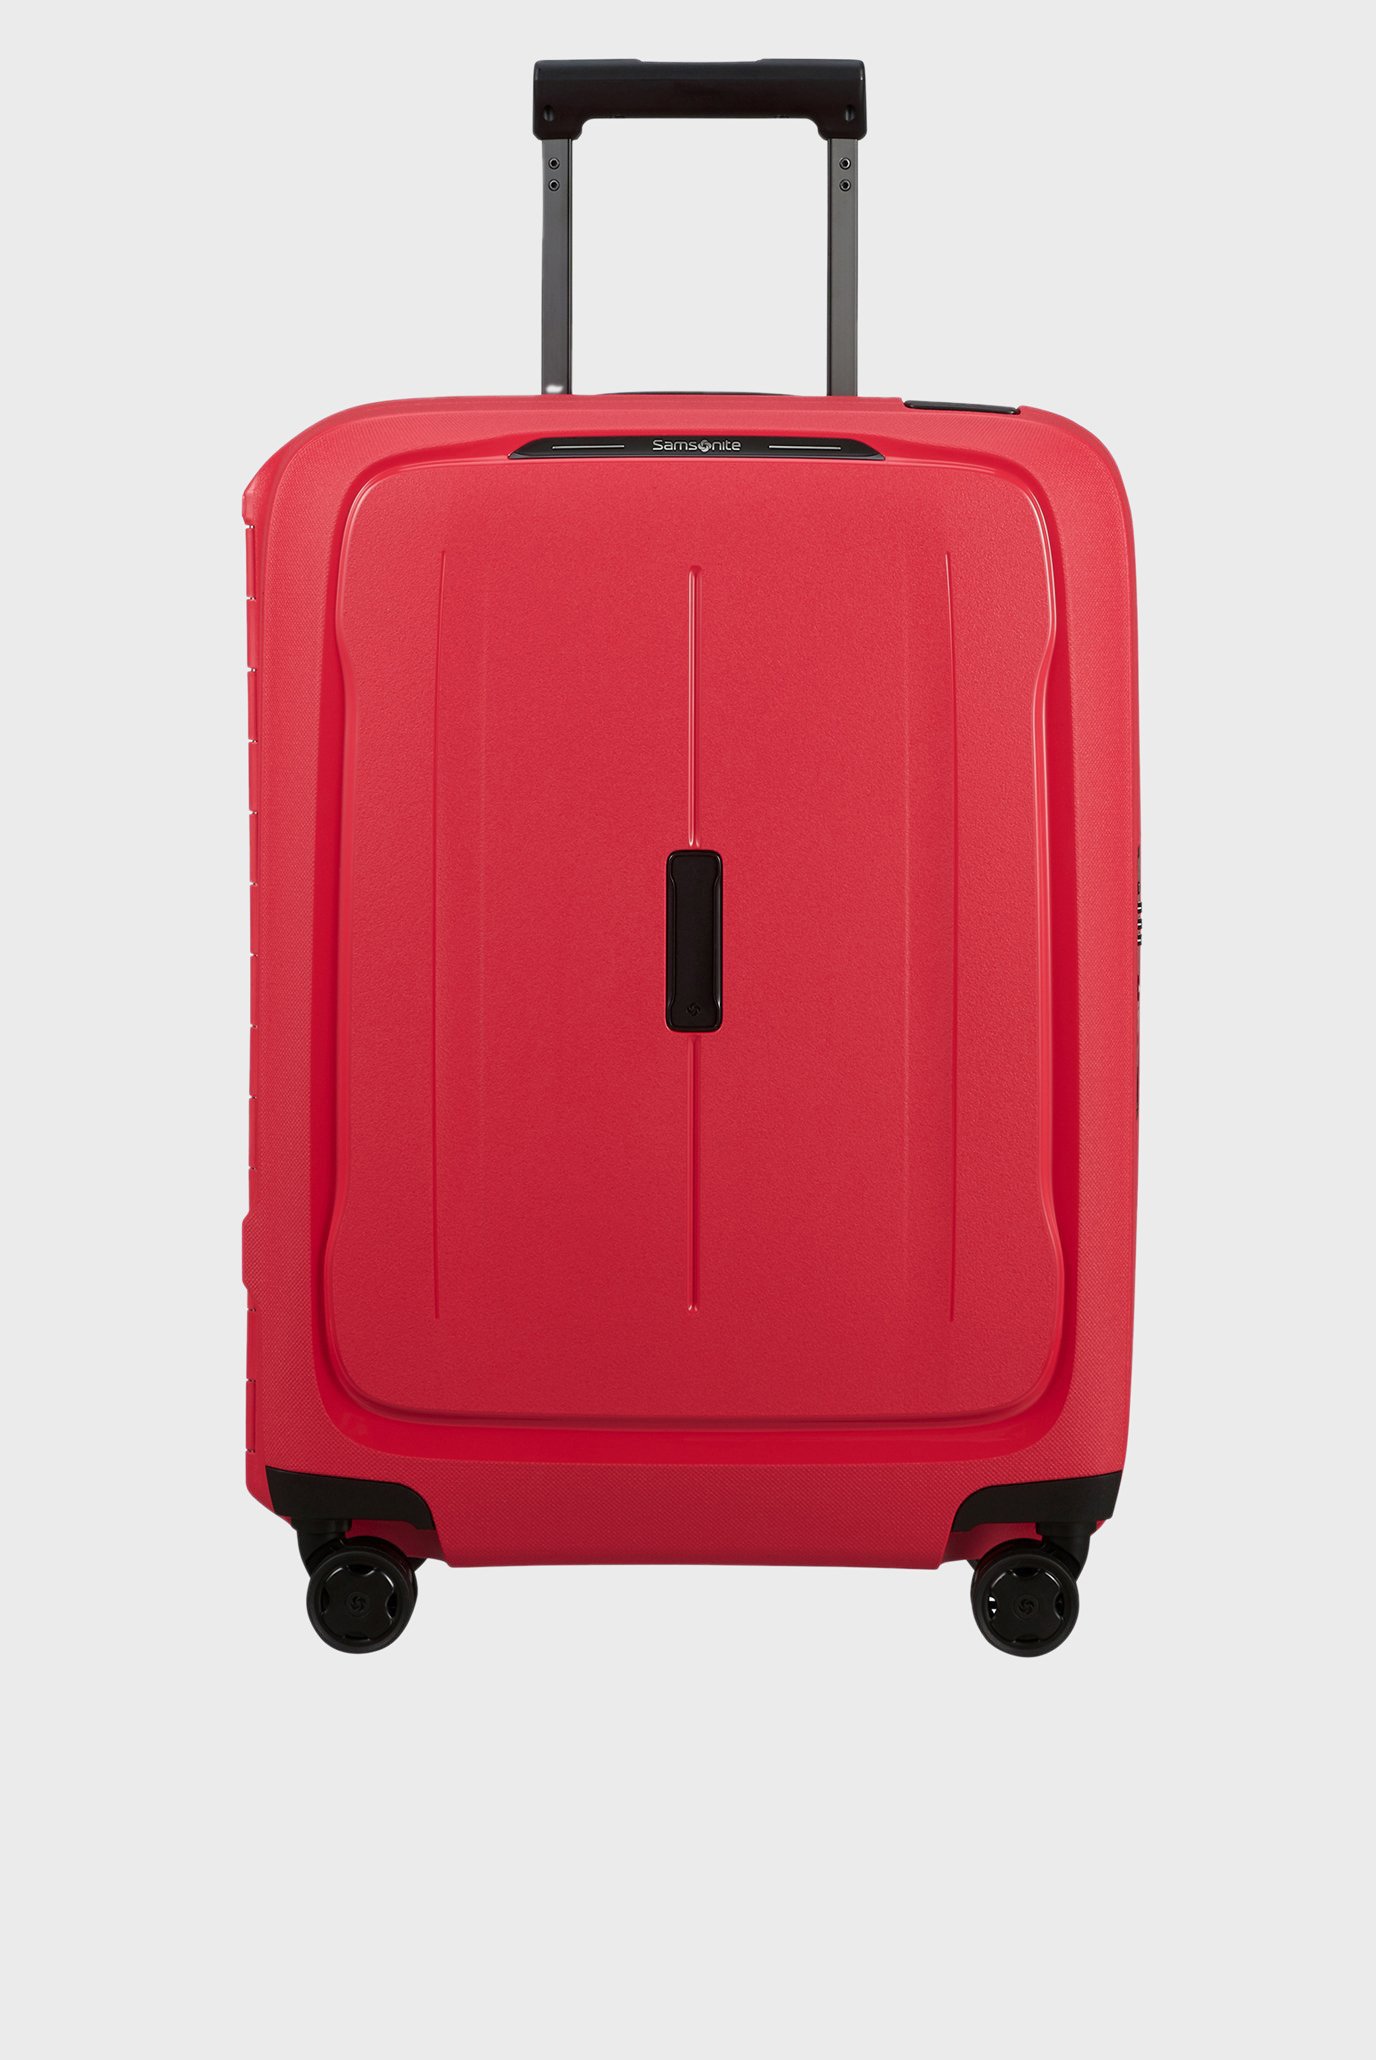 Красный чемодан 55 см ESSENS HIBISCUS RED 1